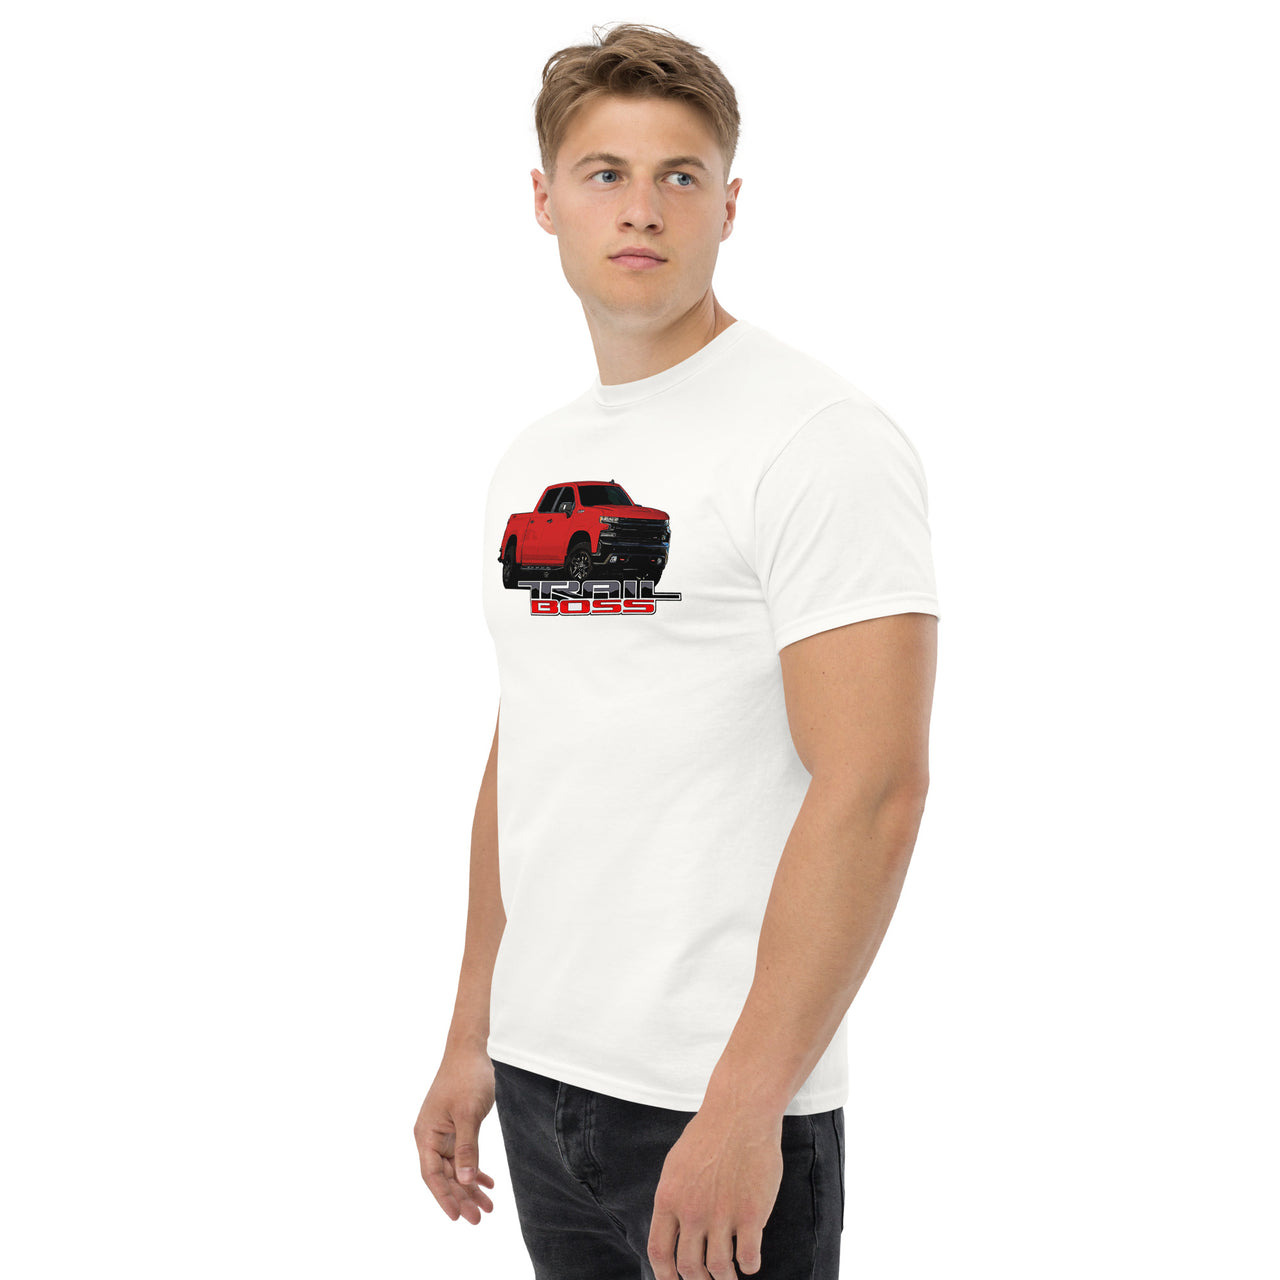 Red Trail Boss Truck T-Shirt modeled in white